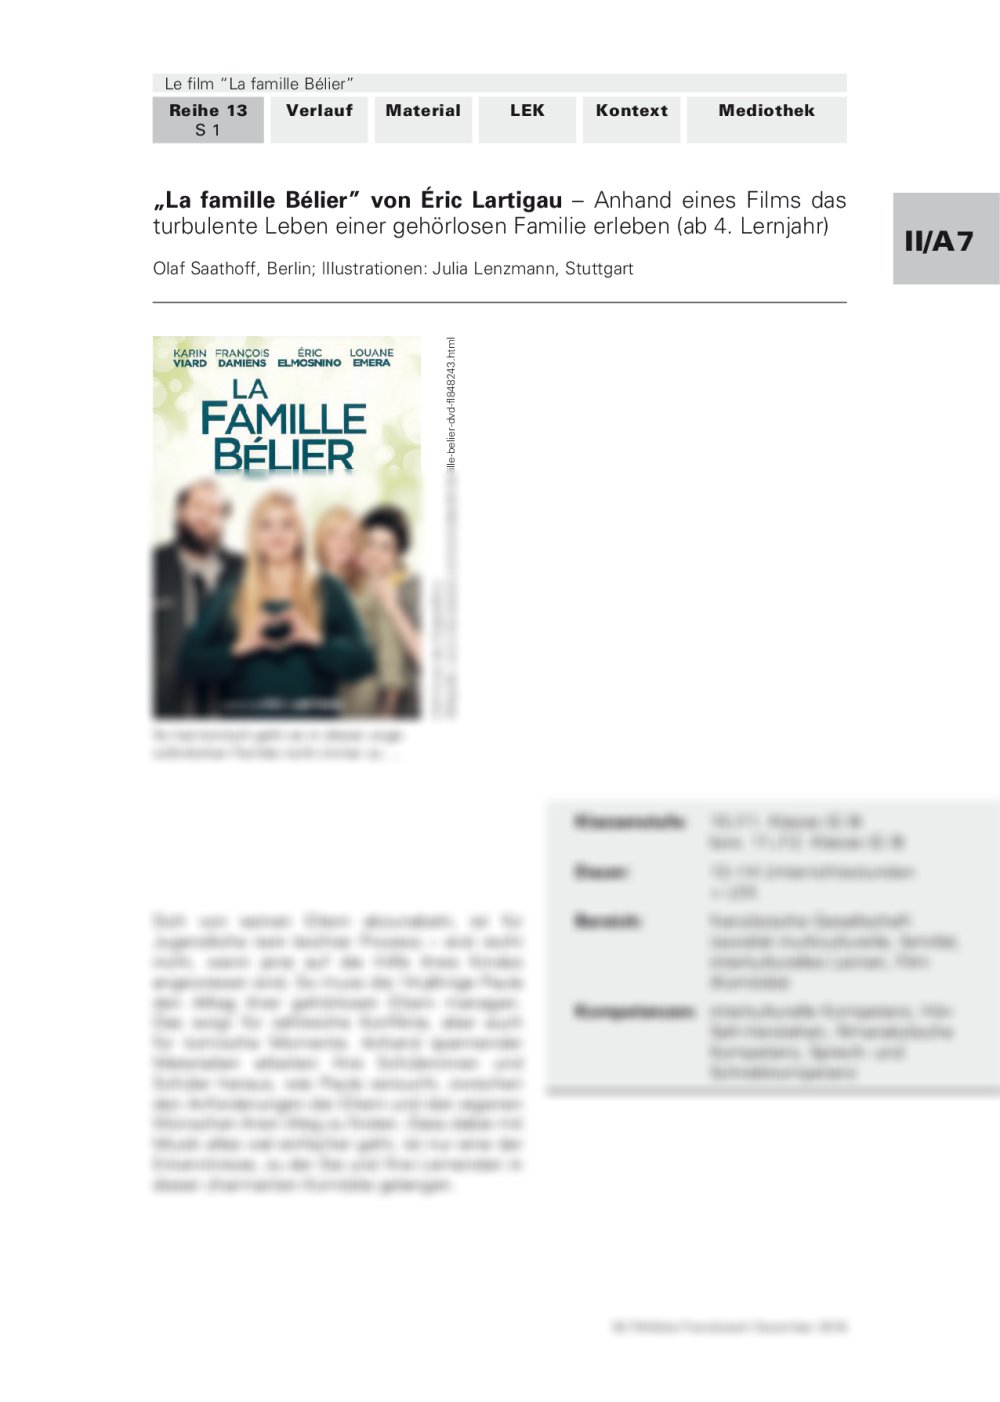 “La famille Bélier” von Éric Lartigau - Seite 1